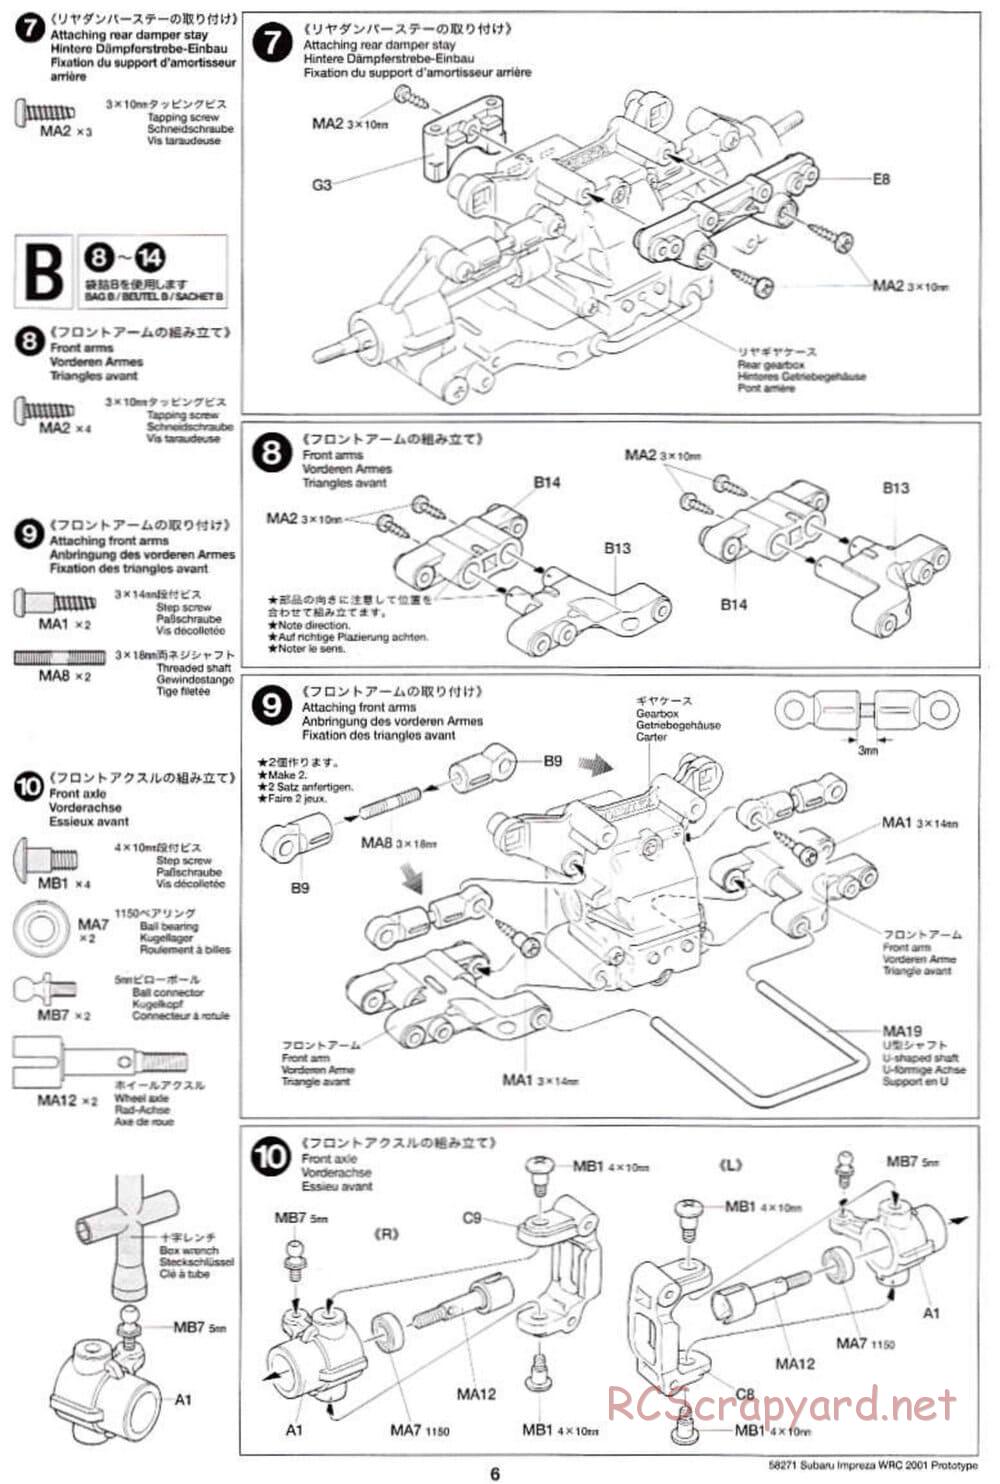 Tamiya - Subaru Impreza WRC 2001 Prototype - TB-01 Chassis - Manual - Page 6